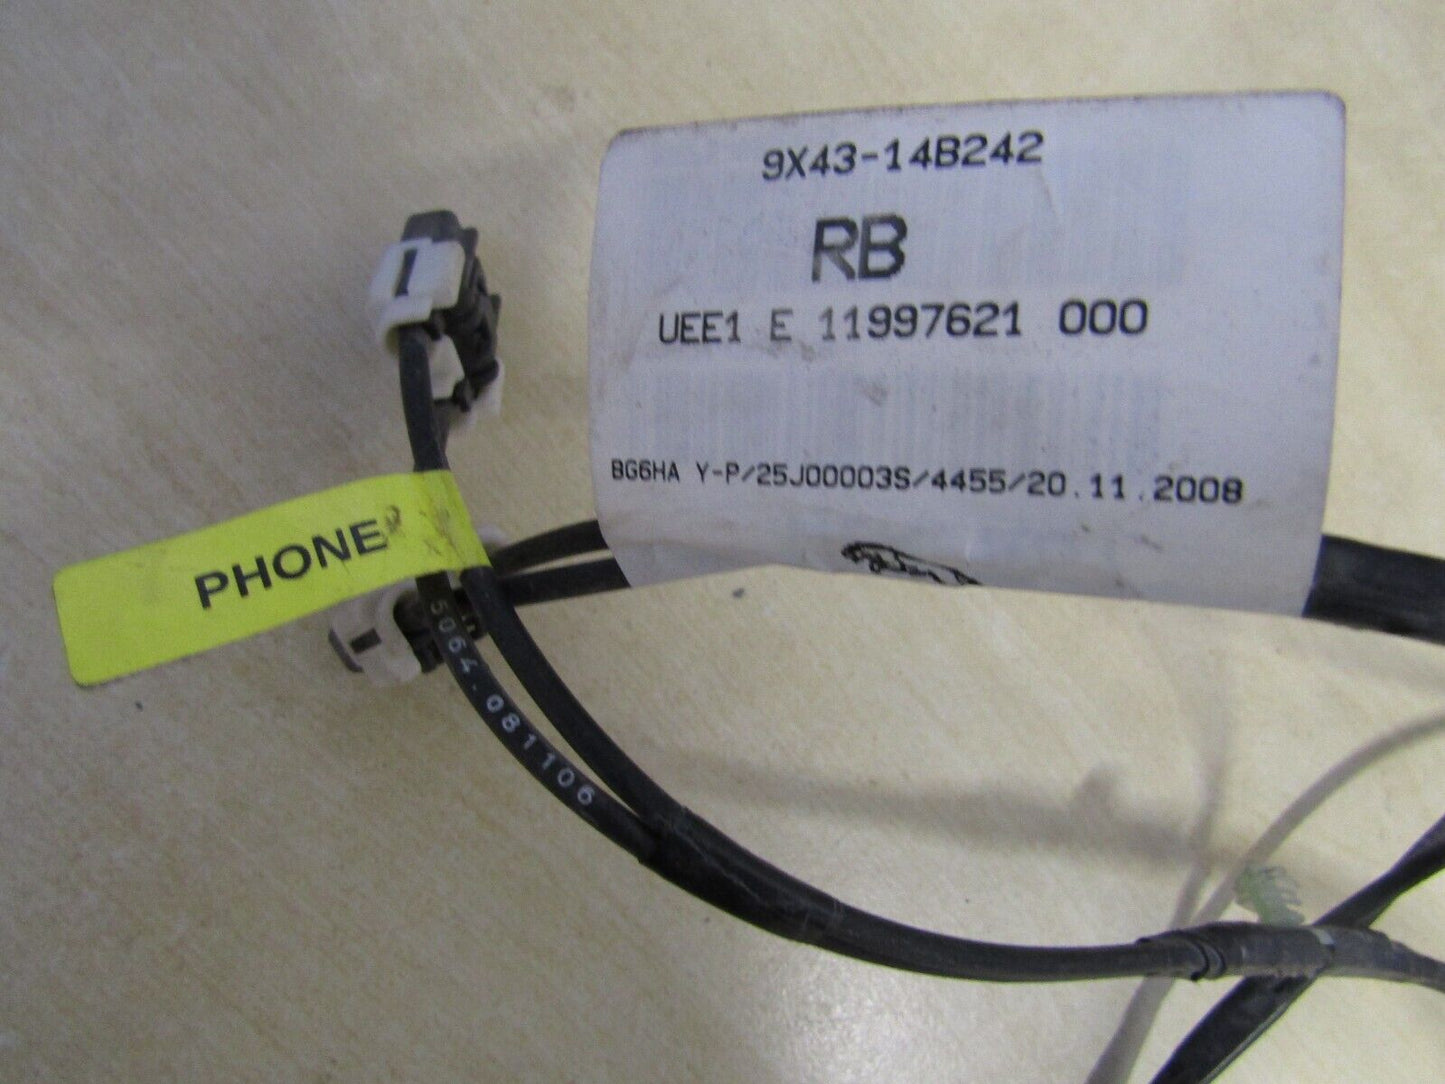 JAGUAR X TYPE BOOT FIBRE OPTIC PHONE LINK LEAD 9X43-14B242-RB